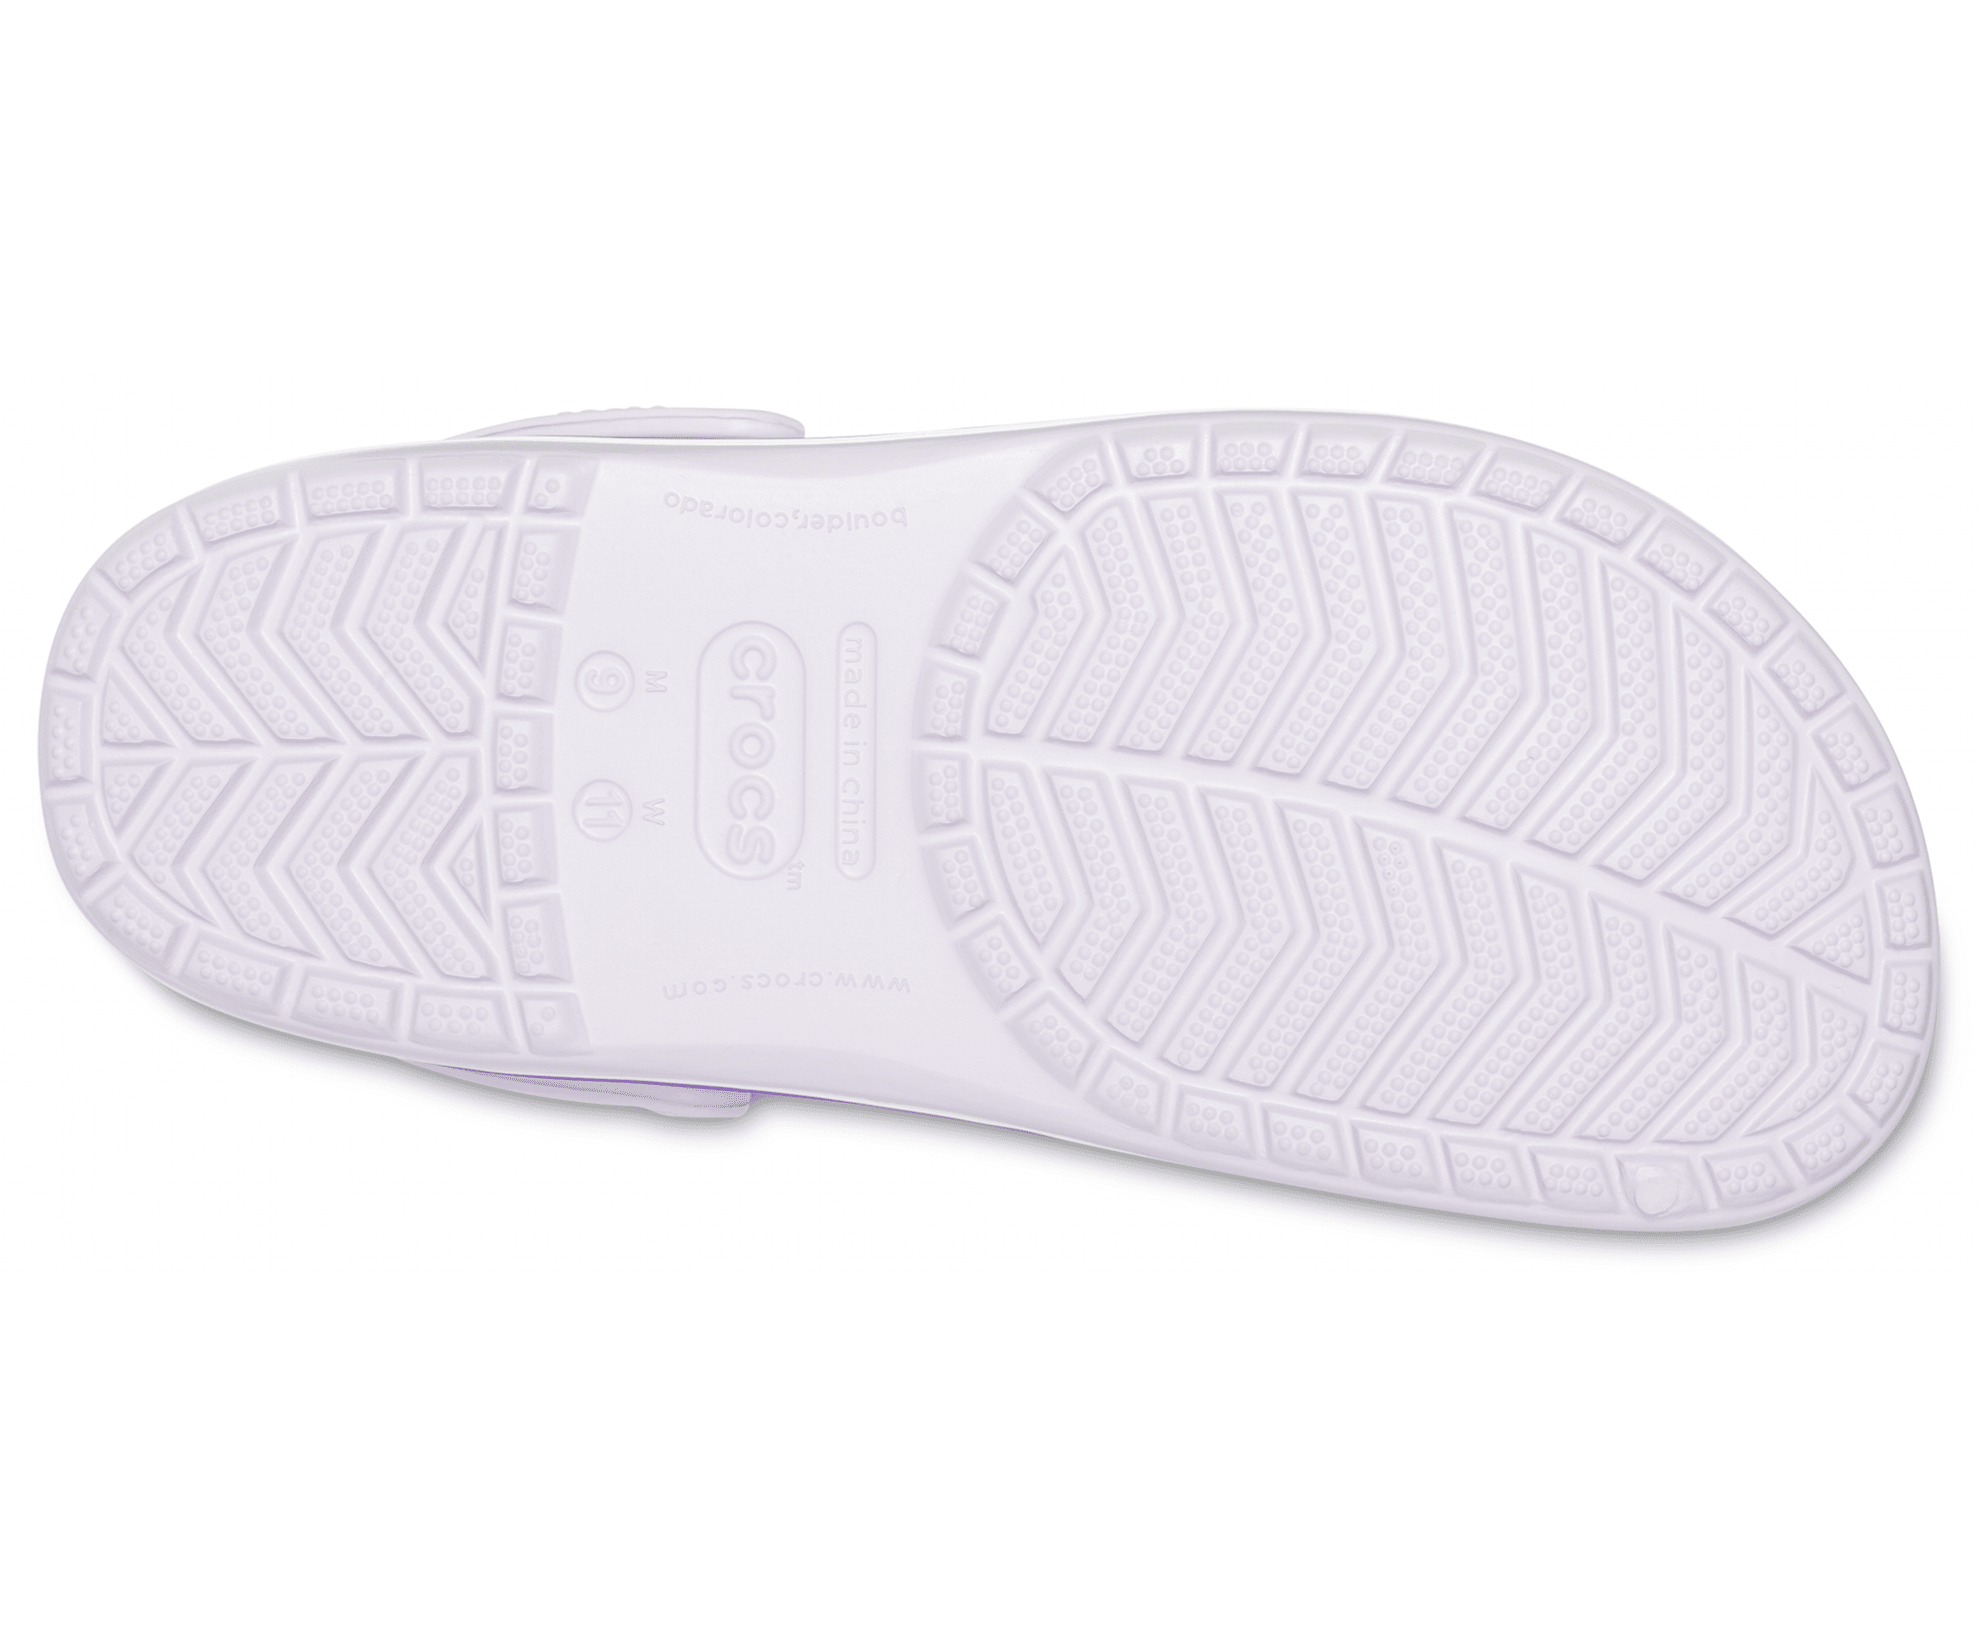 Crocs Unisex Crocband Clog - Lavender - The Foot Factory